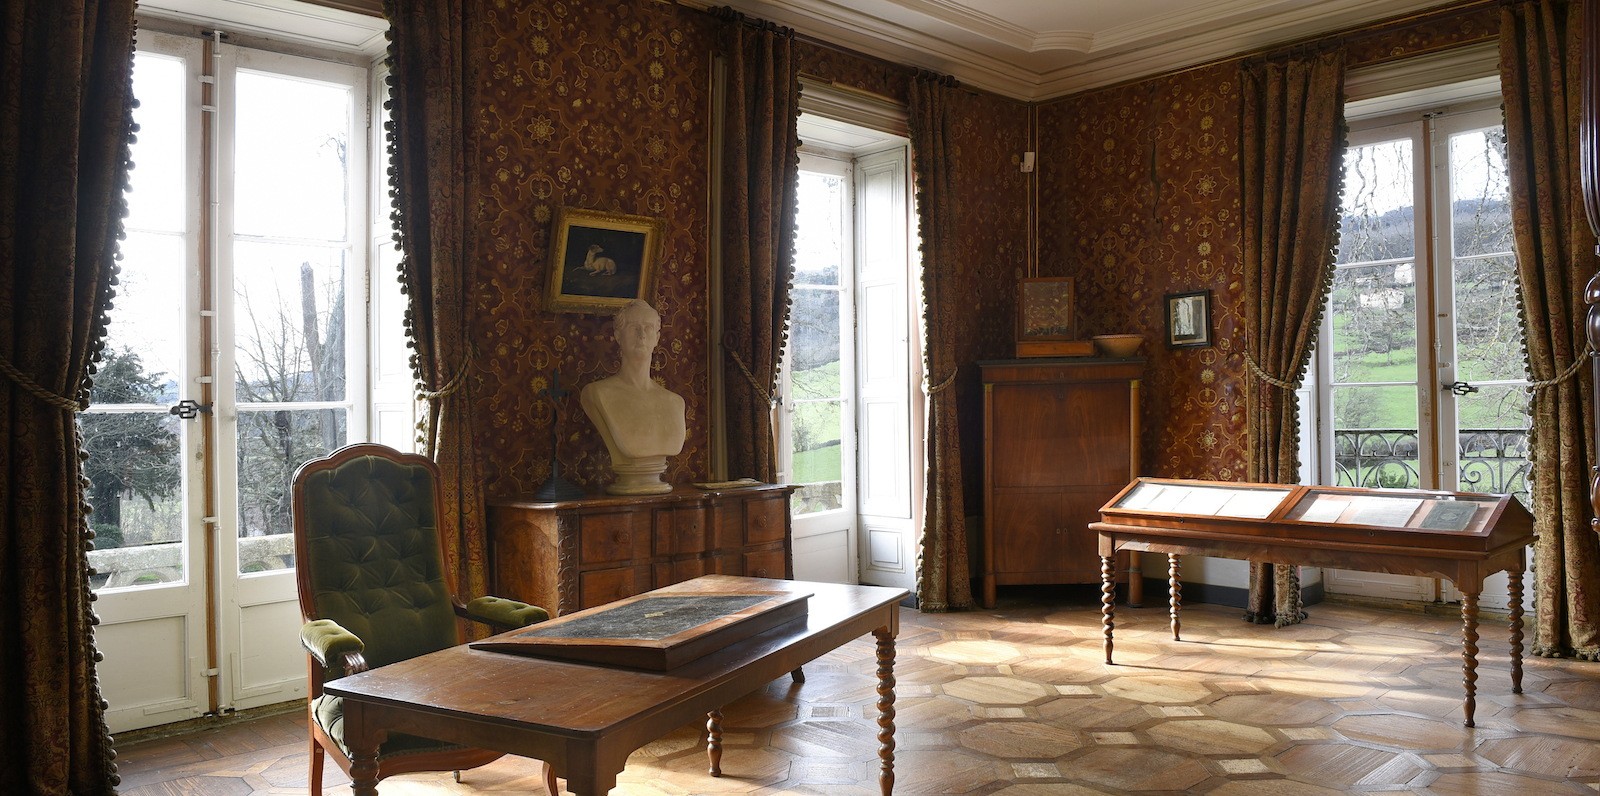 The bedroom of Alphonse de Lamartine